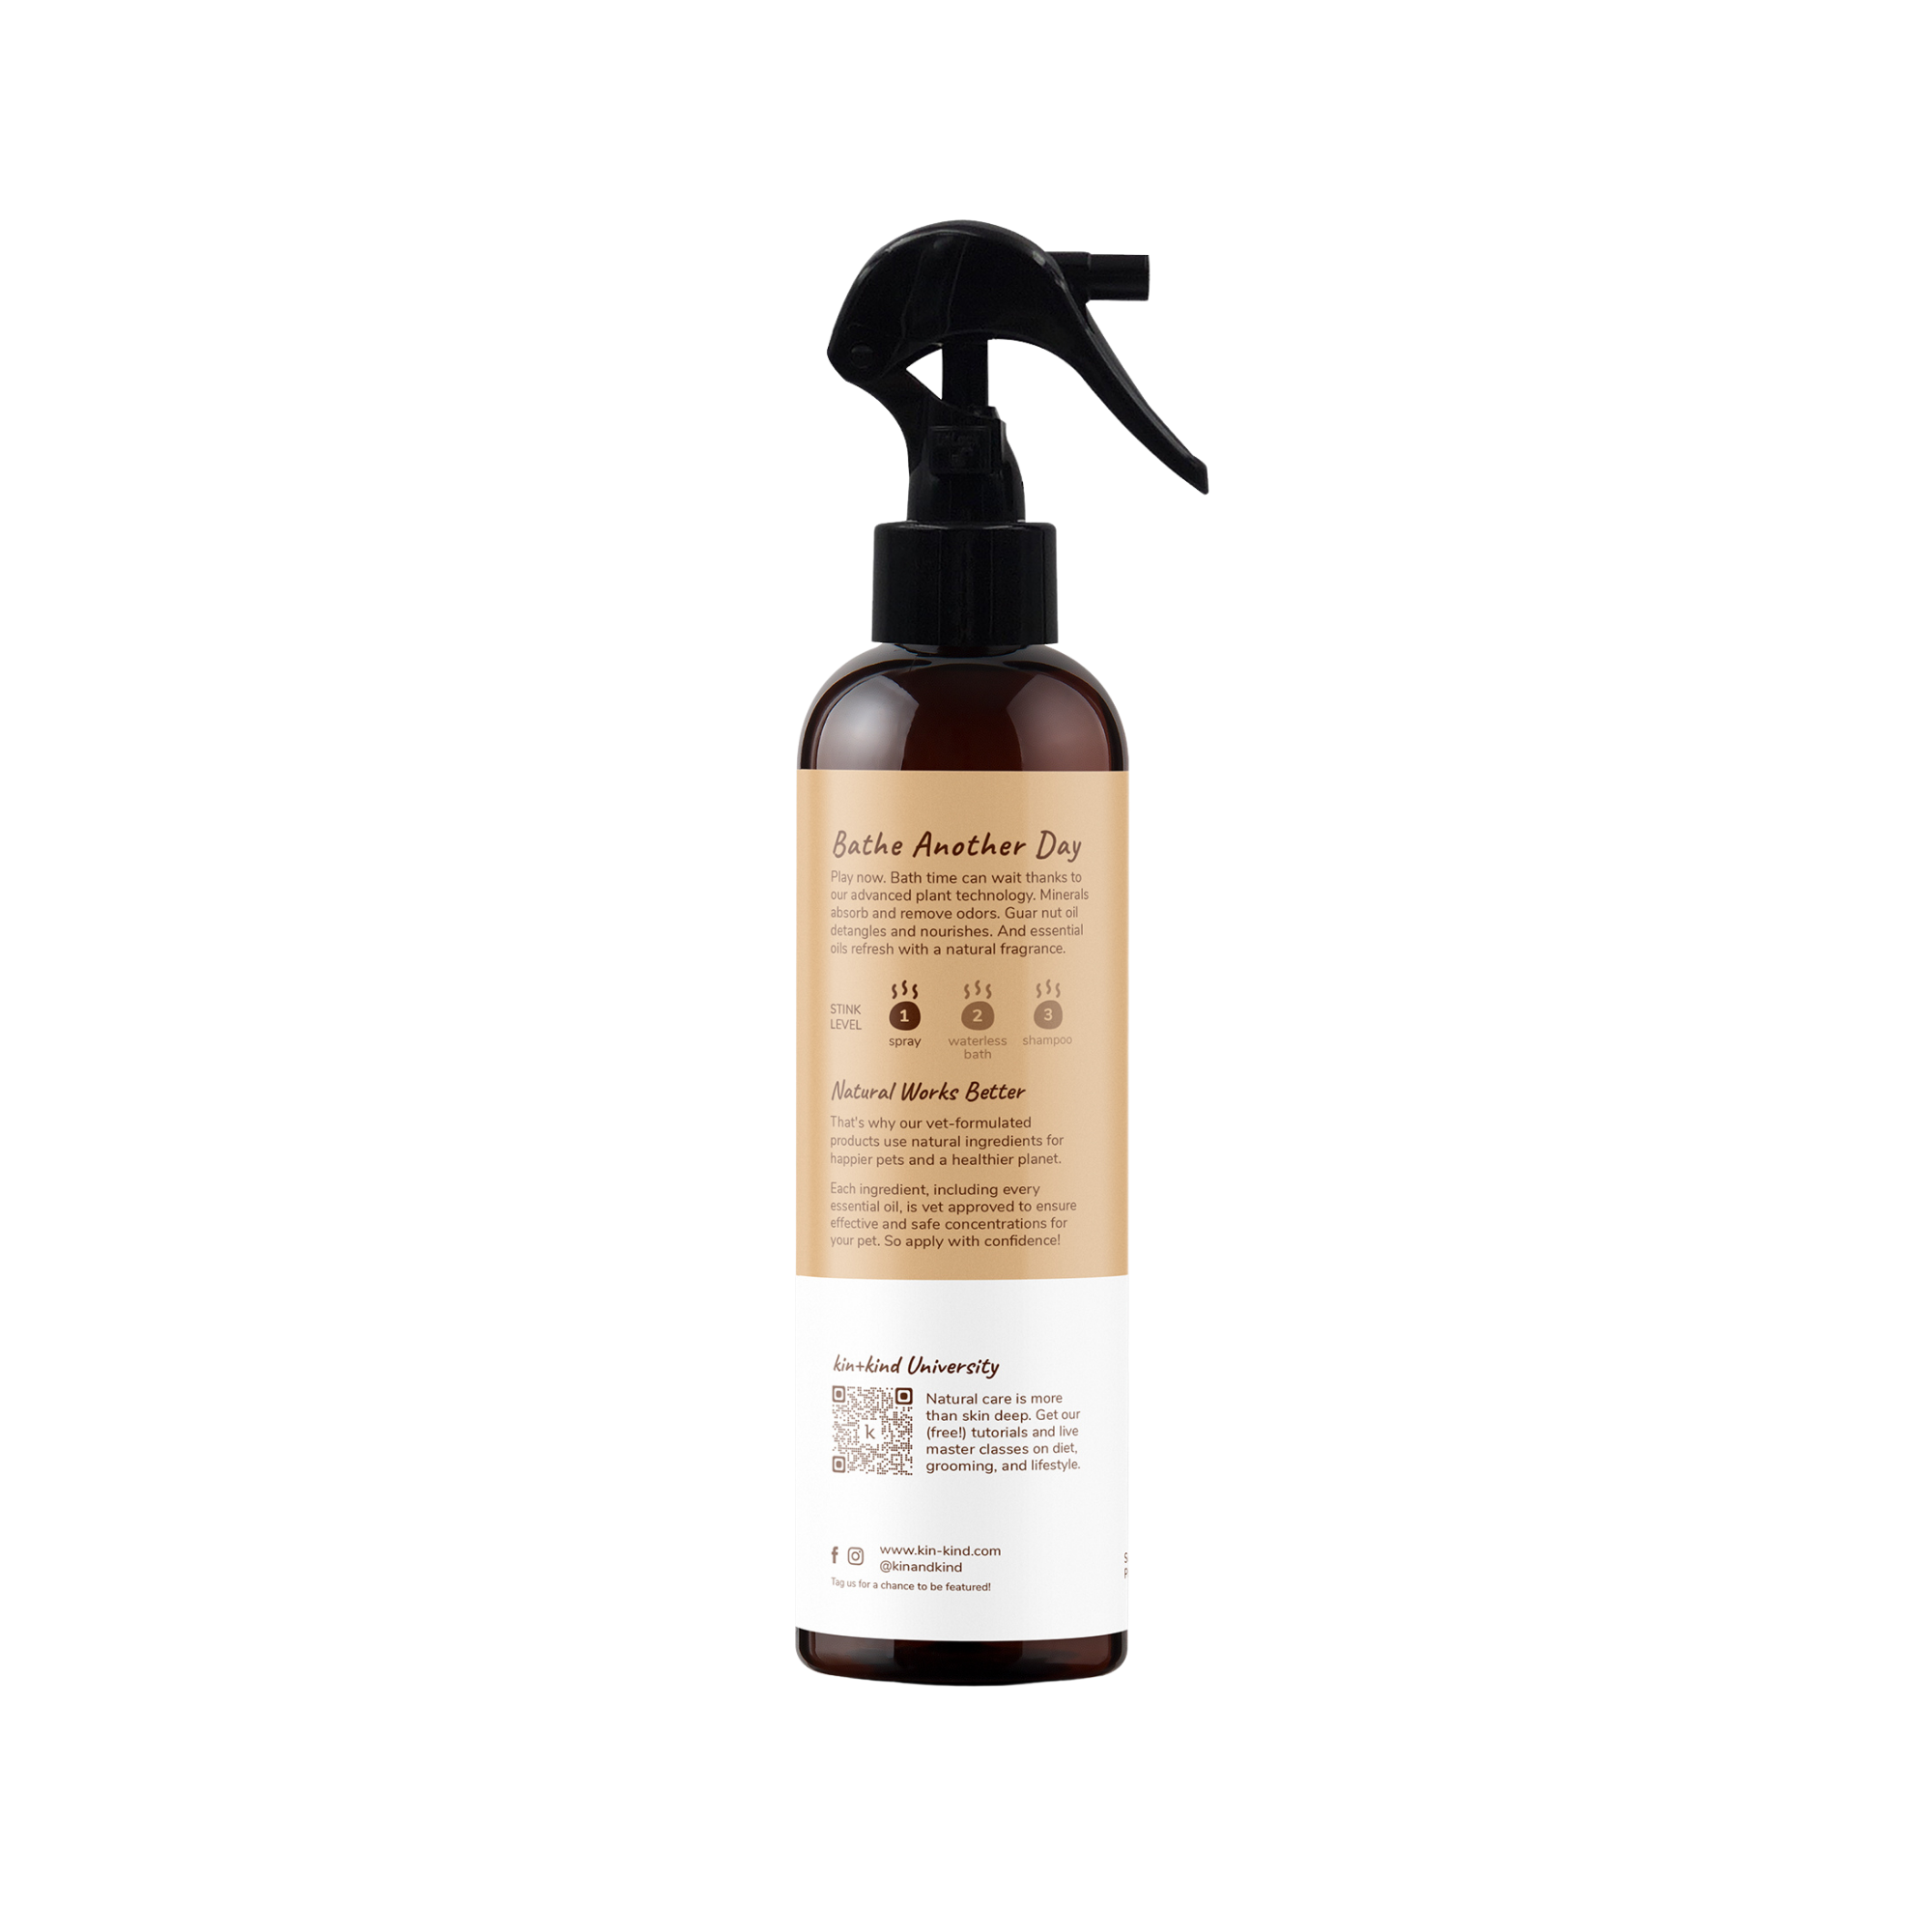 Kin + Kind Almond & Vanilla Natural Coat Spray for Dog Smells 12 oz - Mutts & Co.